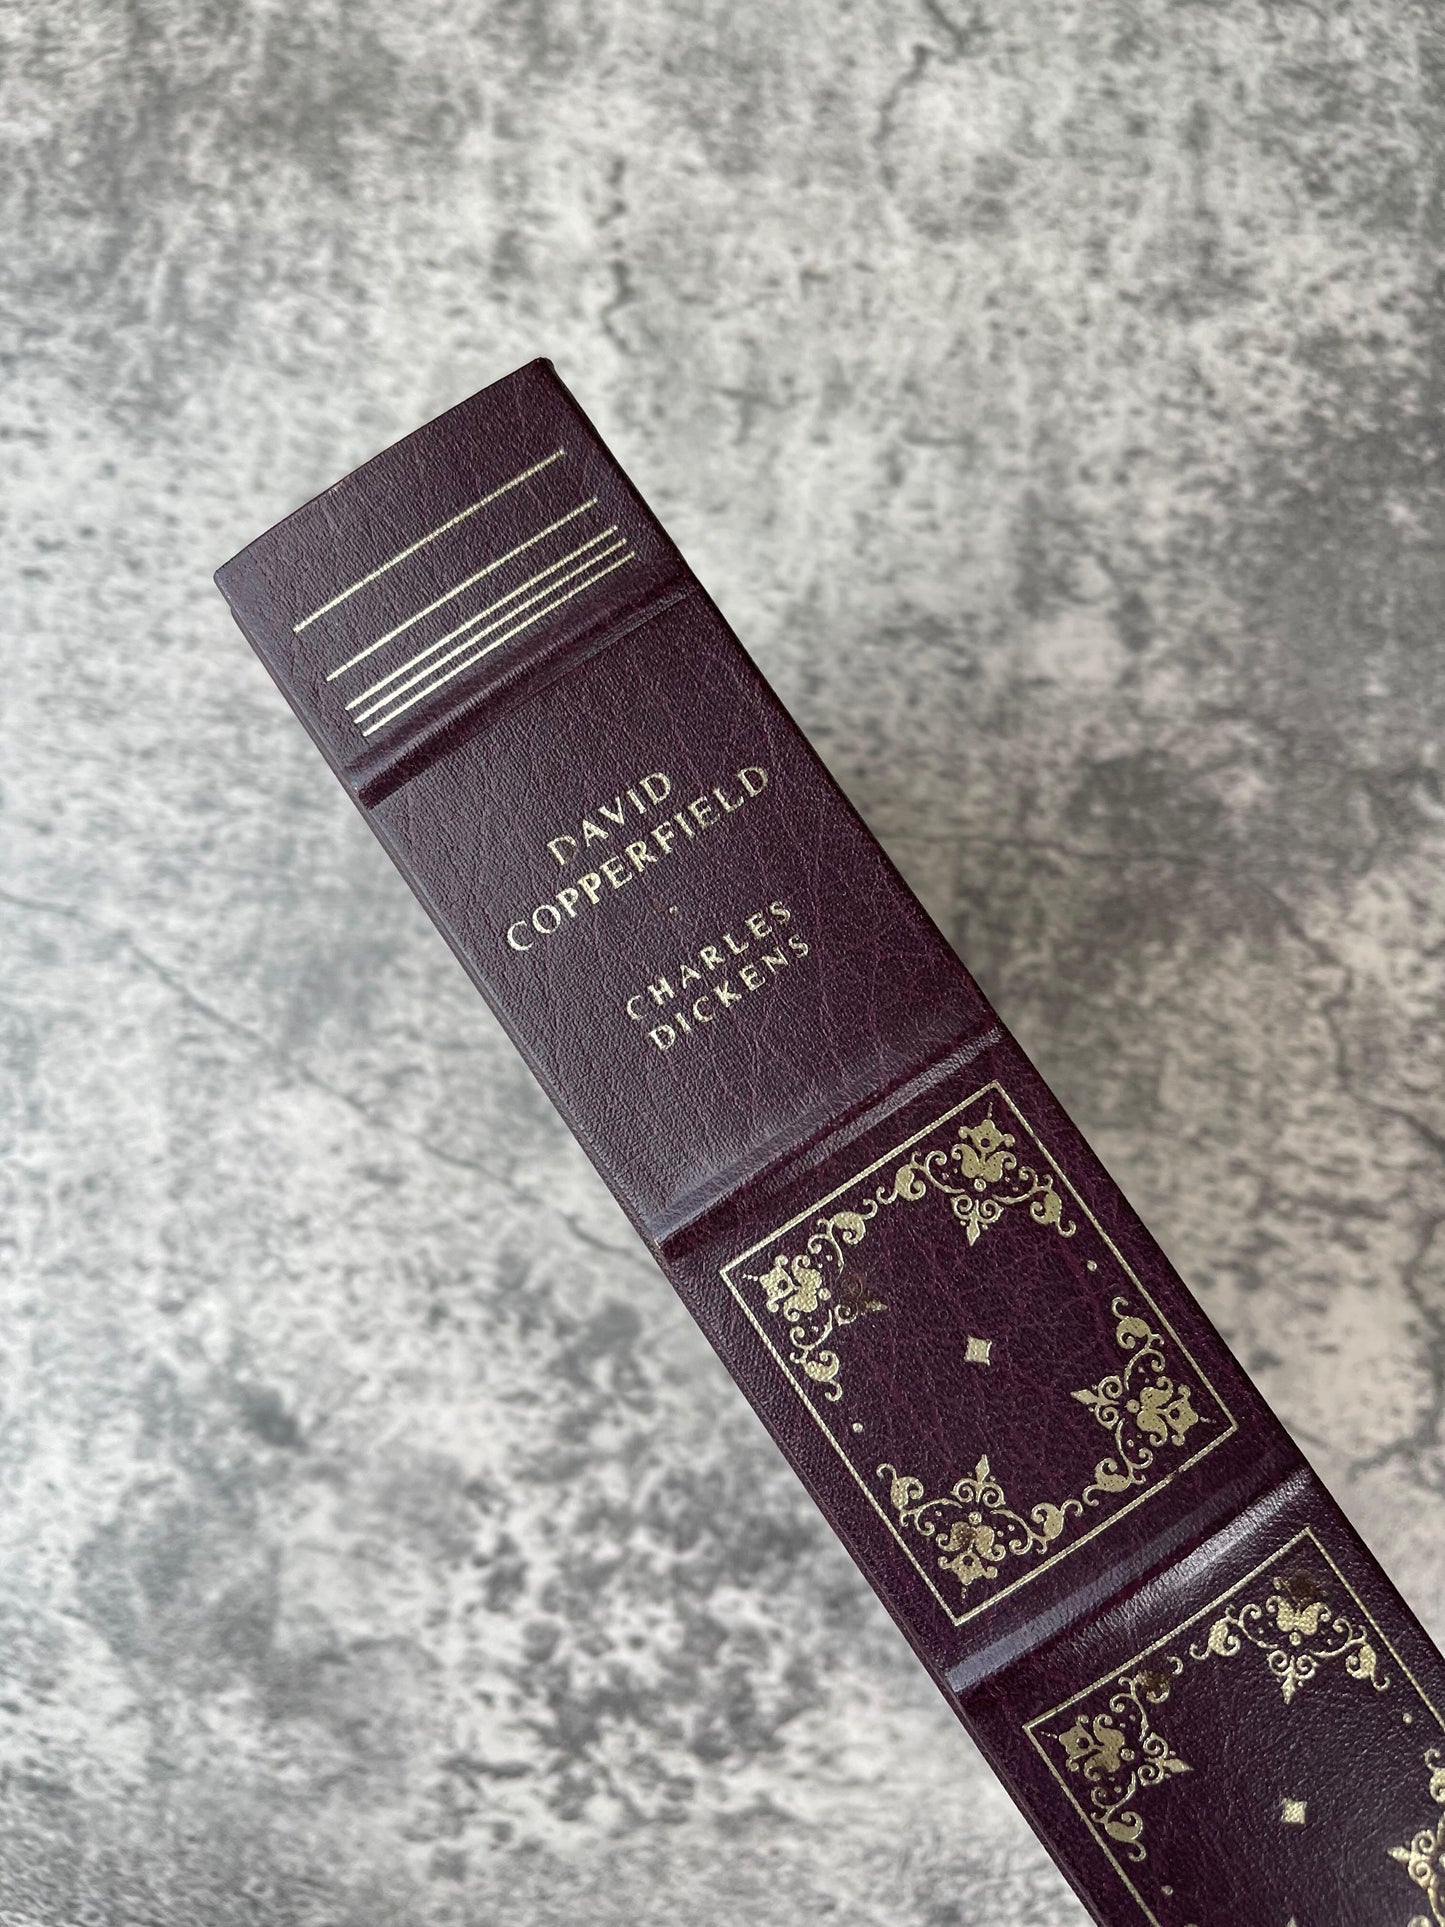 David Copperfield / The Franklin Library / 1980 - Precious Cache